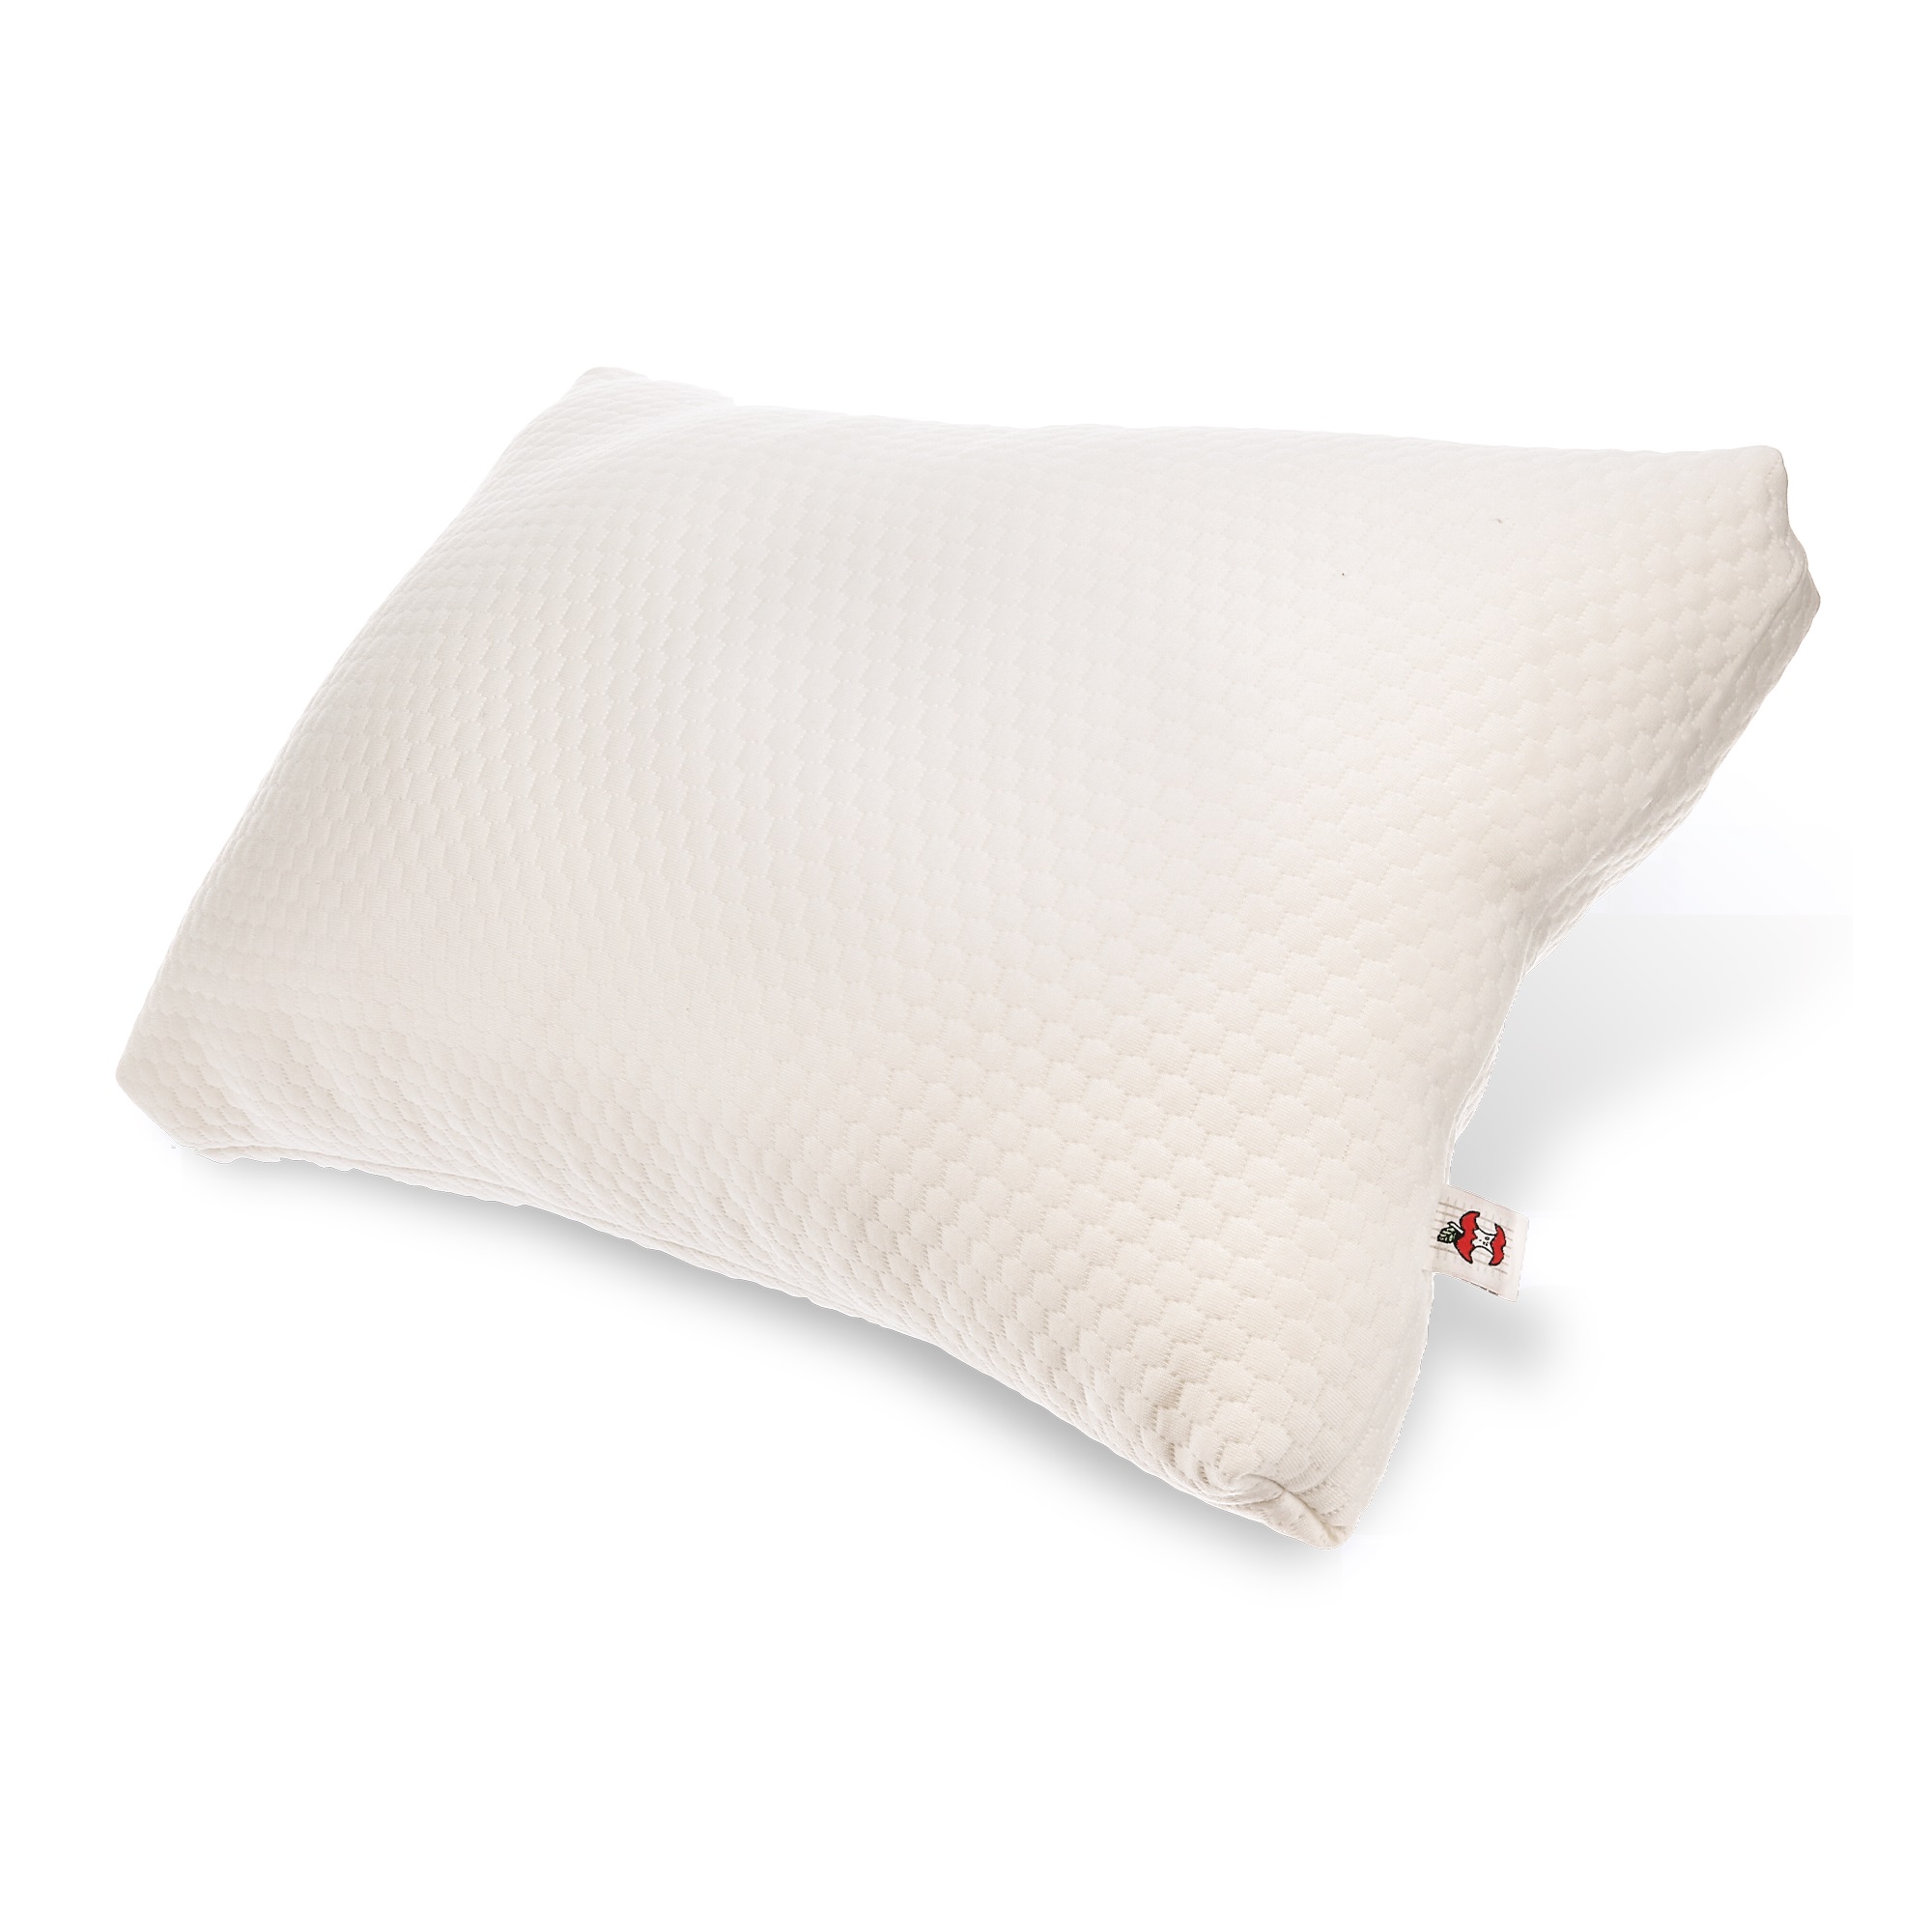 Adjust-A-Loft Fiber Adjustable Comfort Pillow